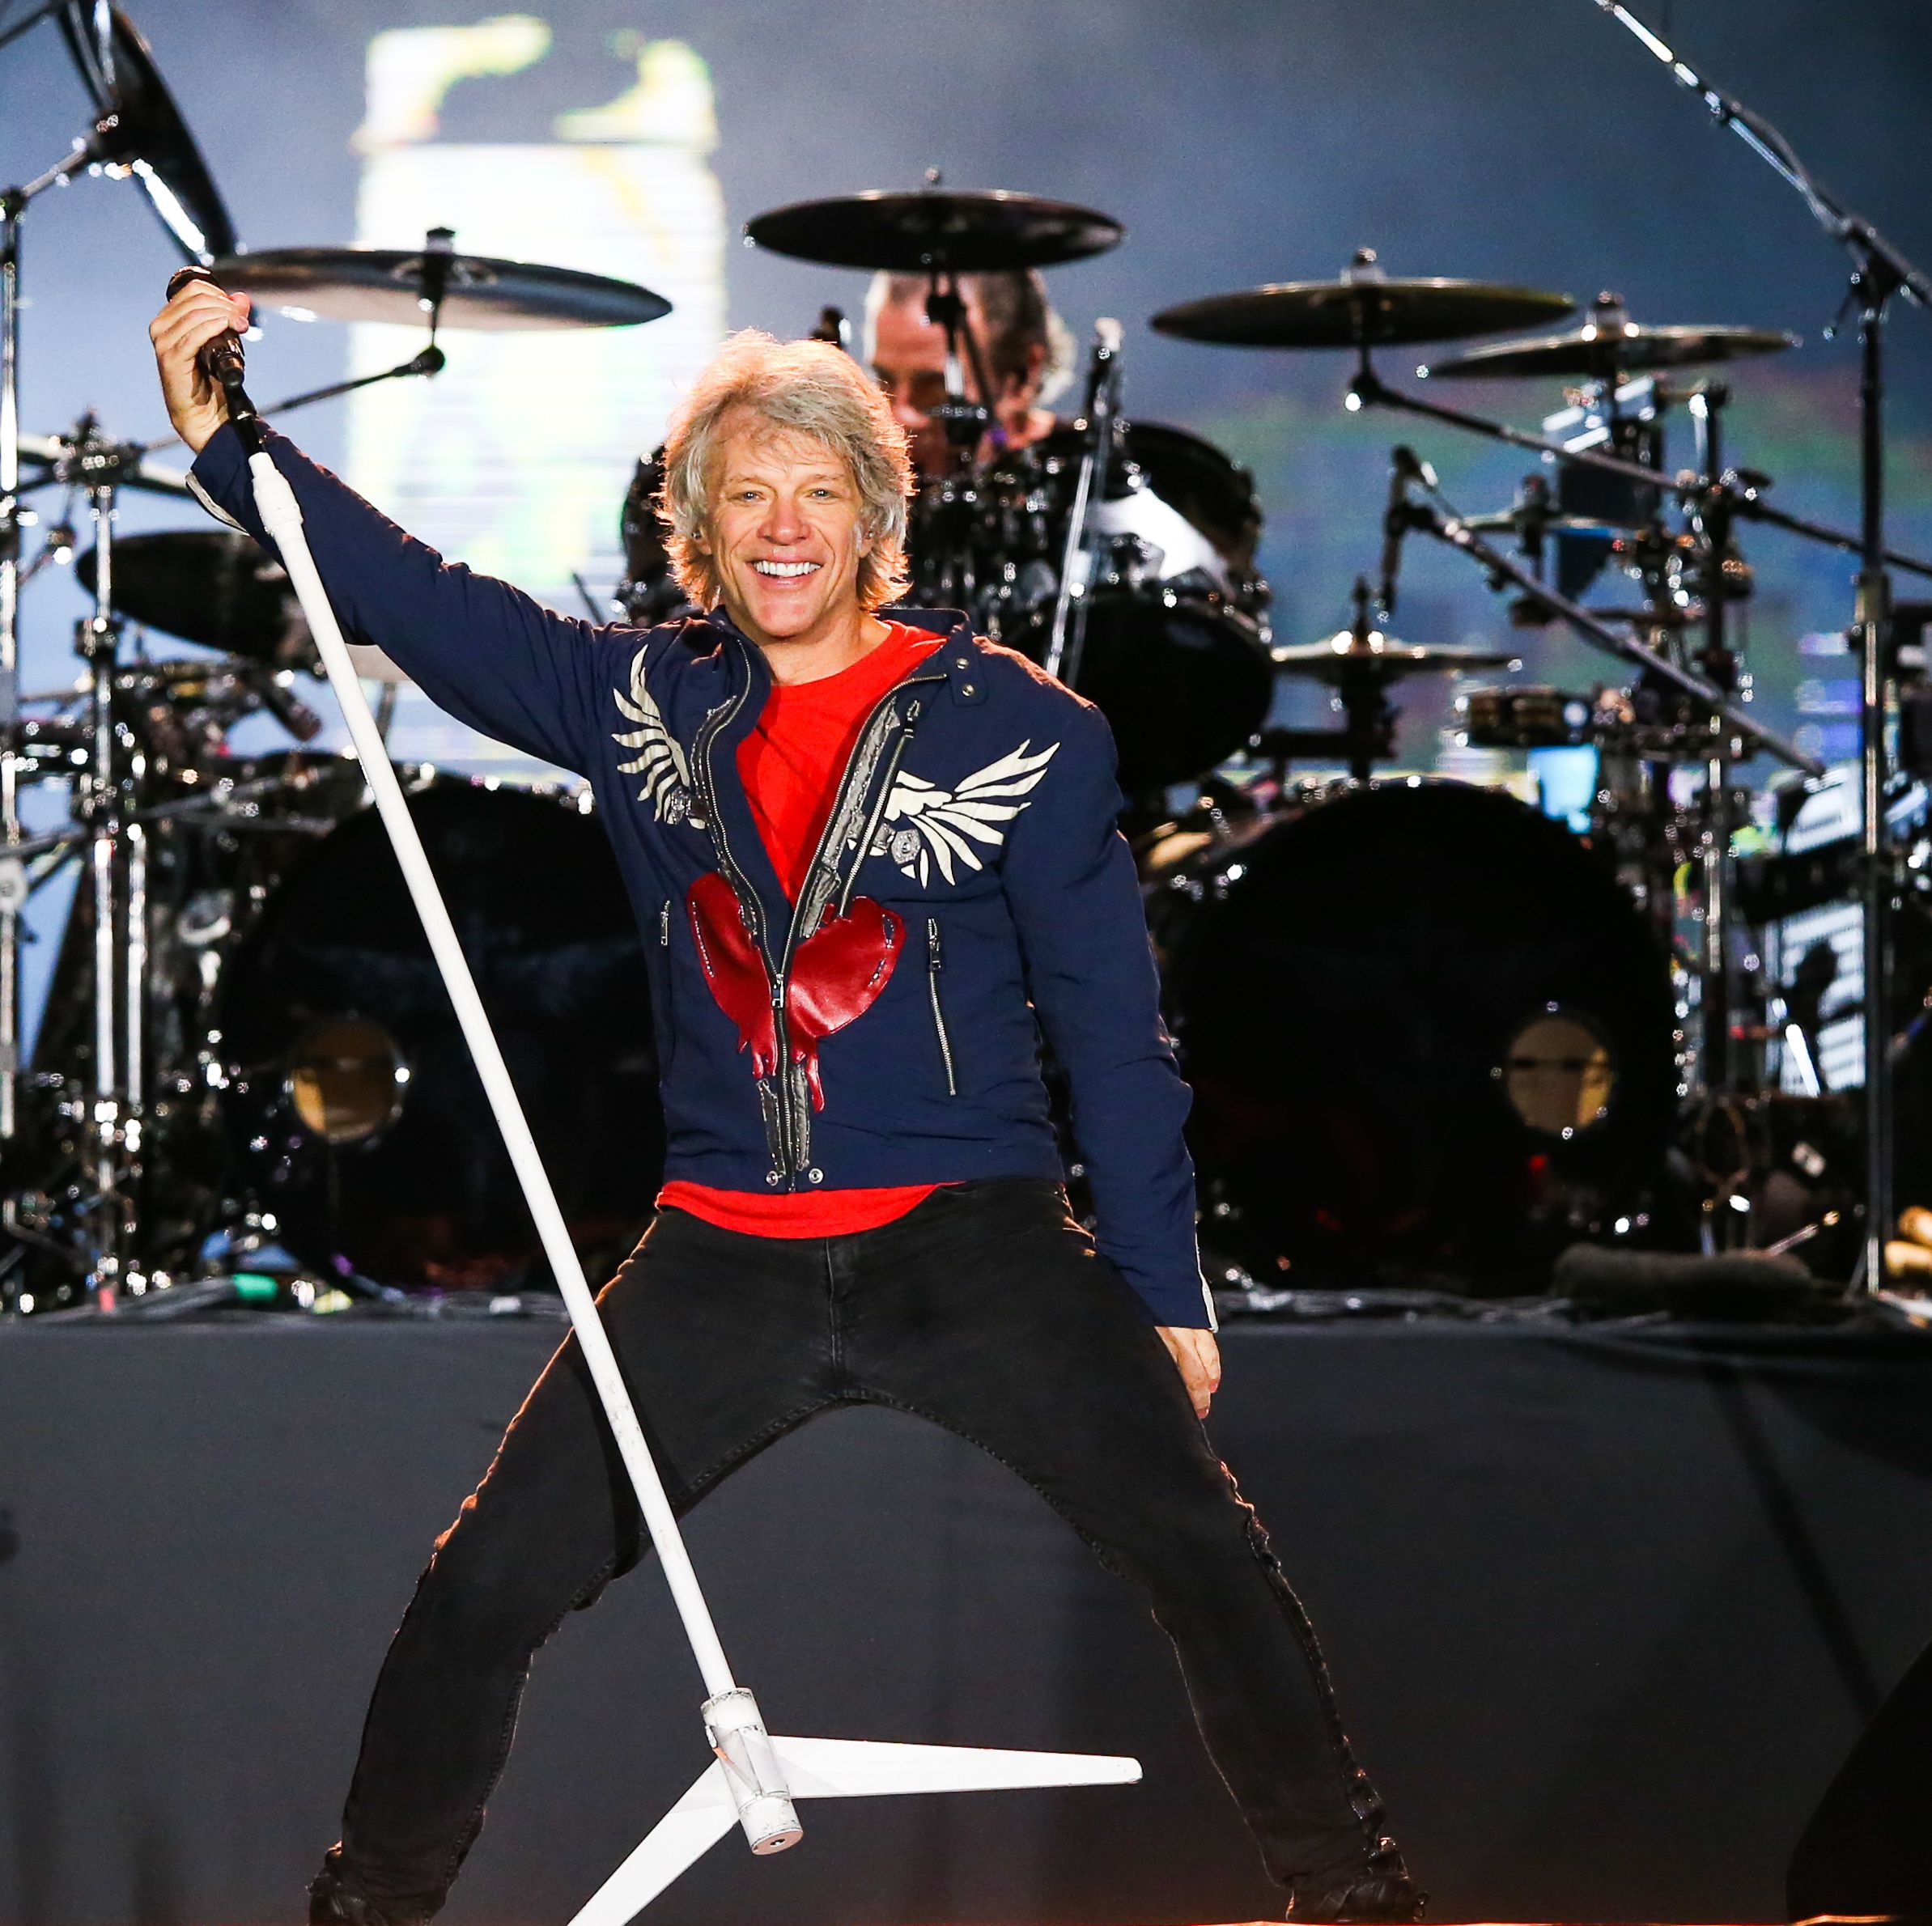 Super Bowl Organizers Are Keeping Halftime Rehearsals Secret By Blasting Jon Bon Jovi 24/7